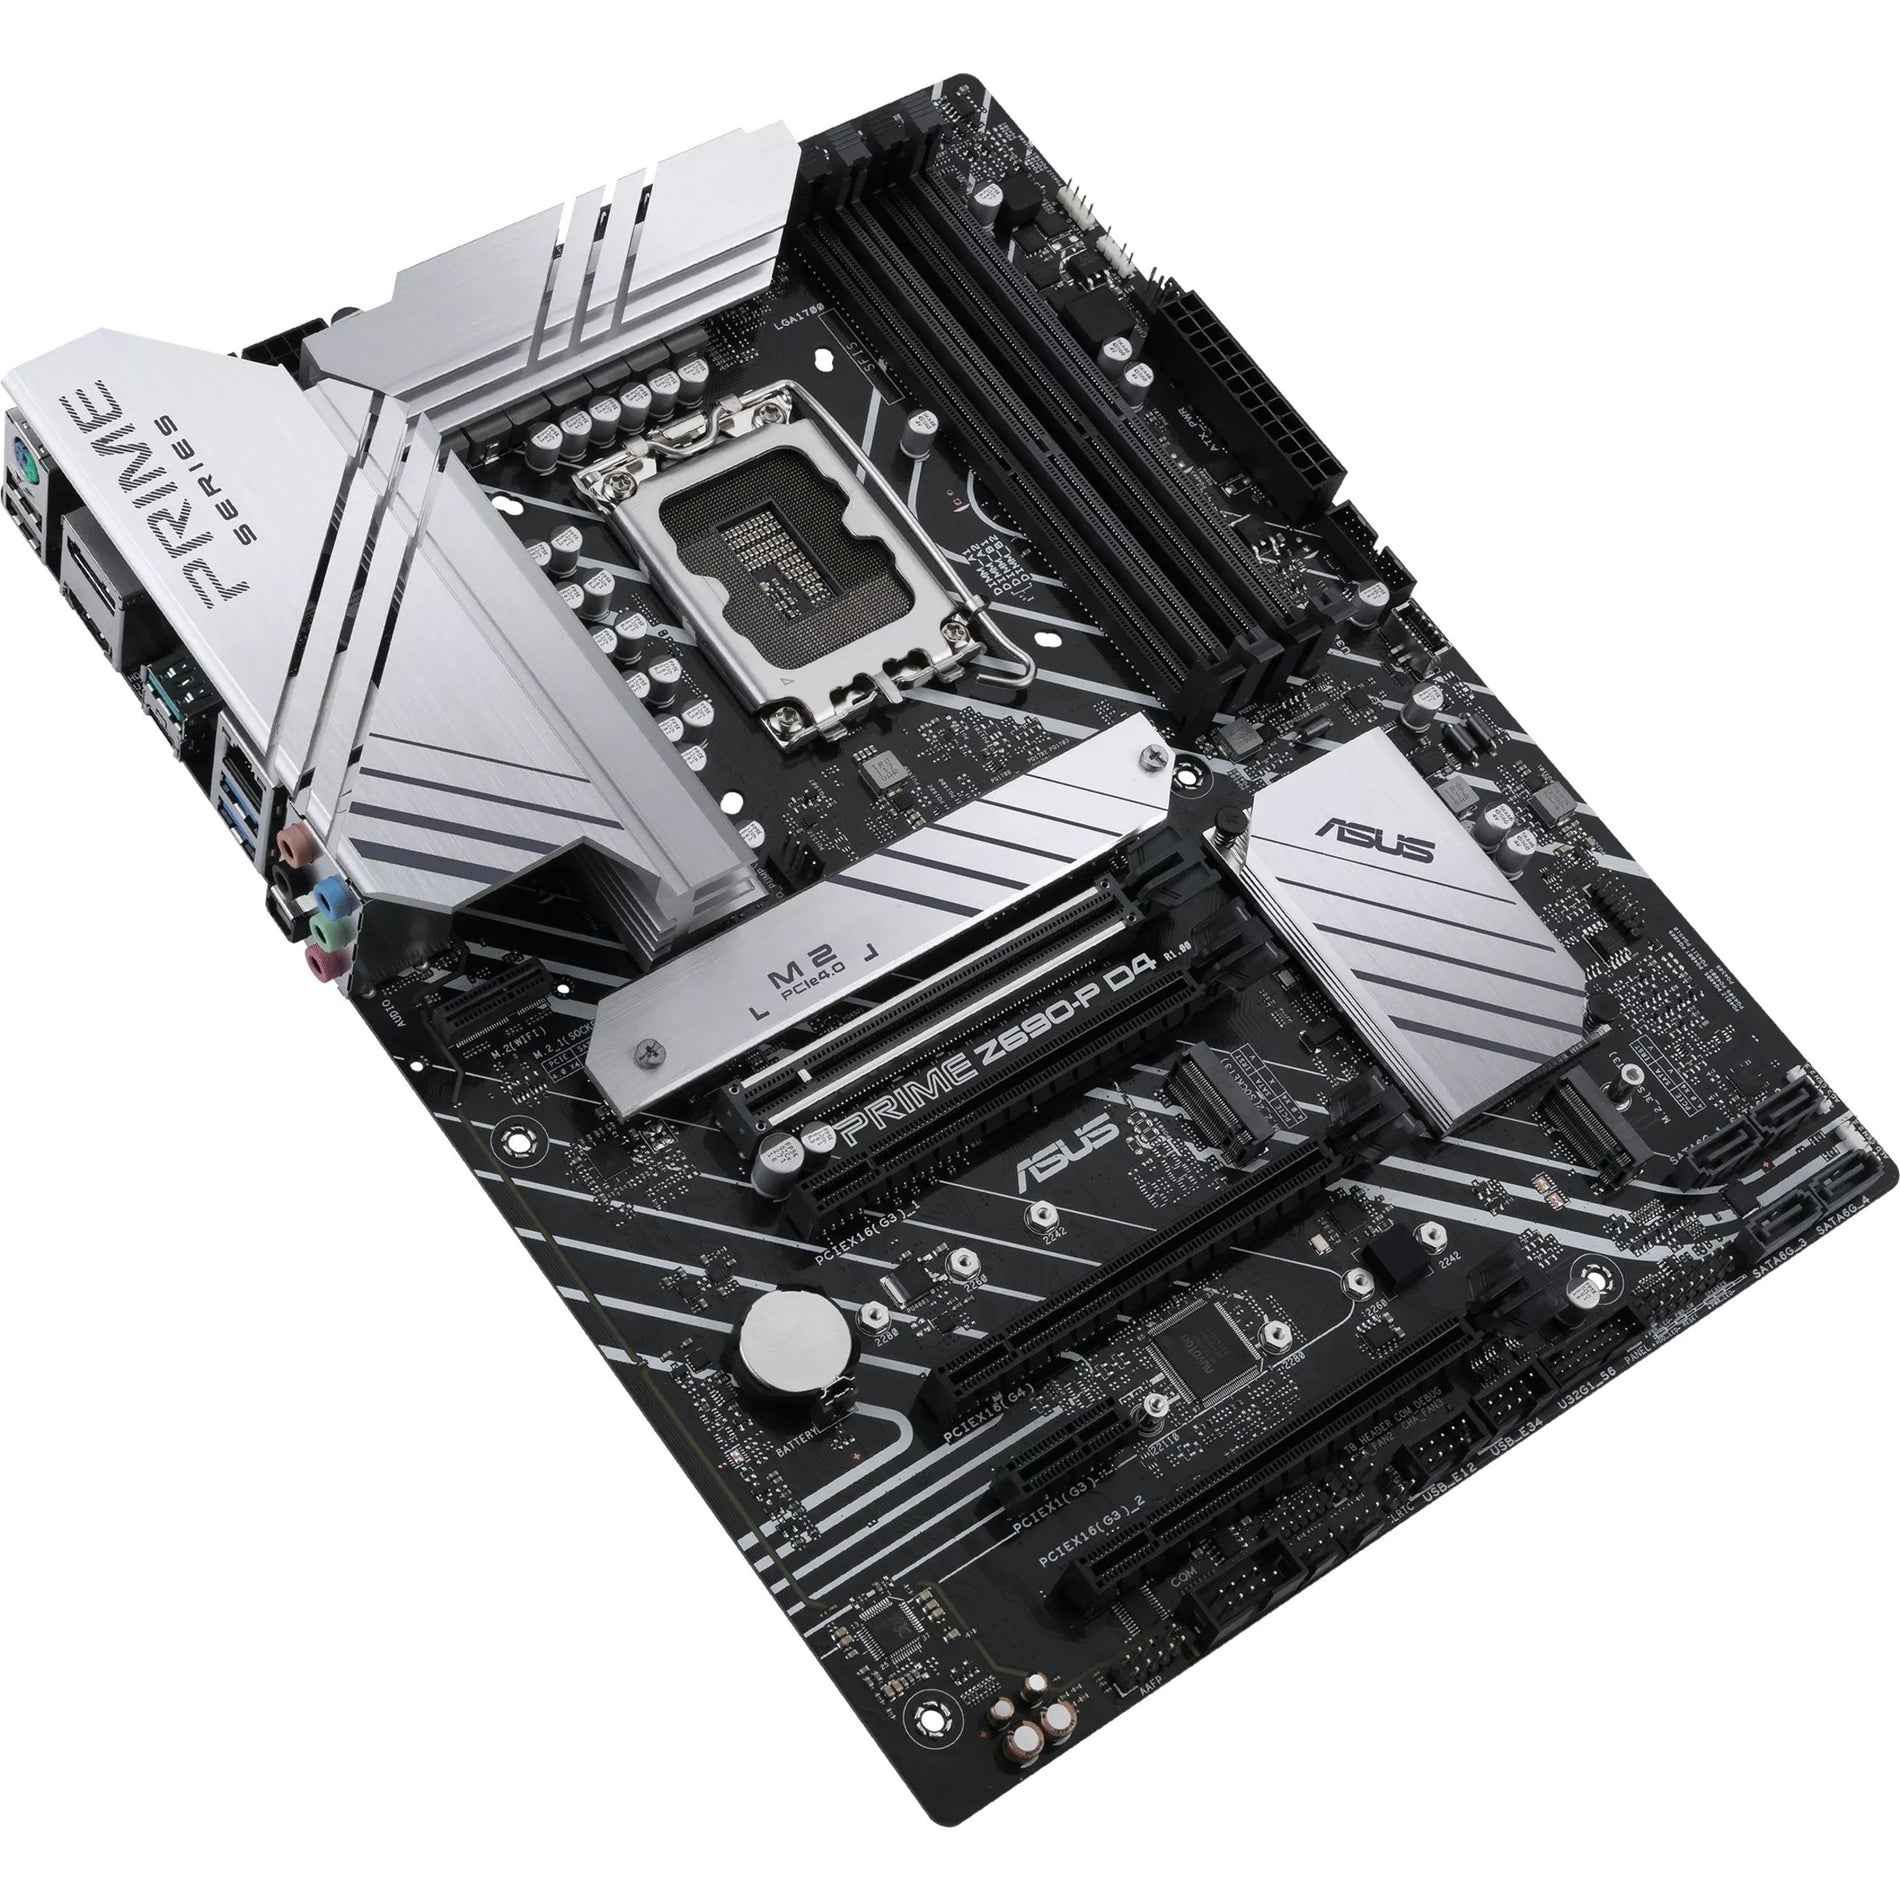 Asus Desktop Motherboard PRIME Z690-P D4 Intel Z690 Chipset Socket LGA-1700 Intel Optane Memory Ready ATX